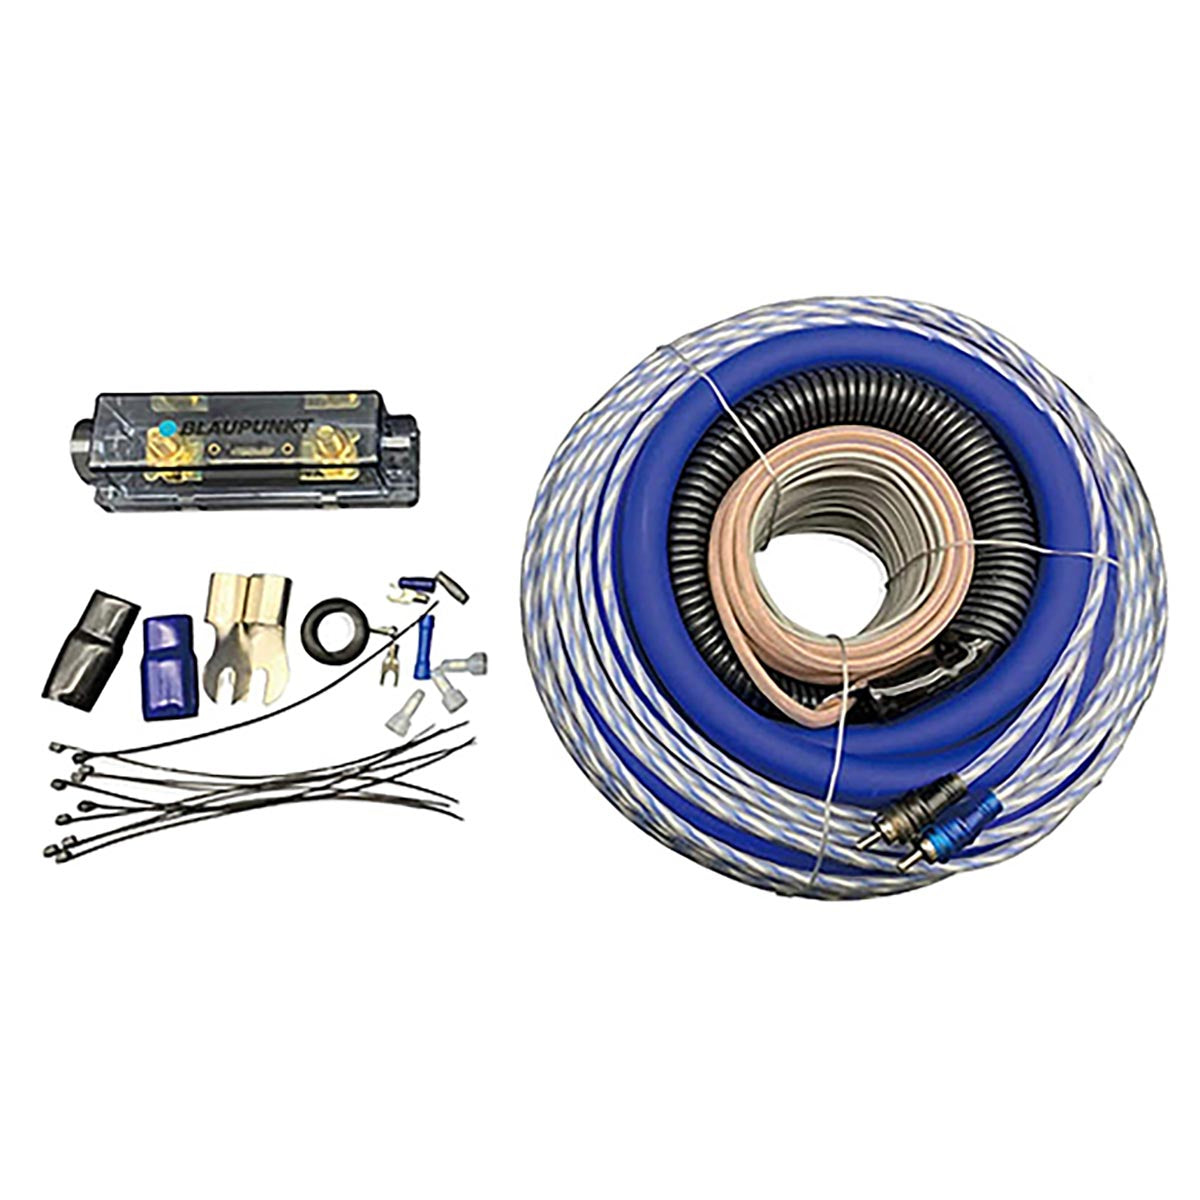 Blaupunkt 0-gauge Complete Amplifier Blue Wire Kit